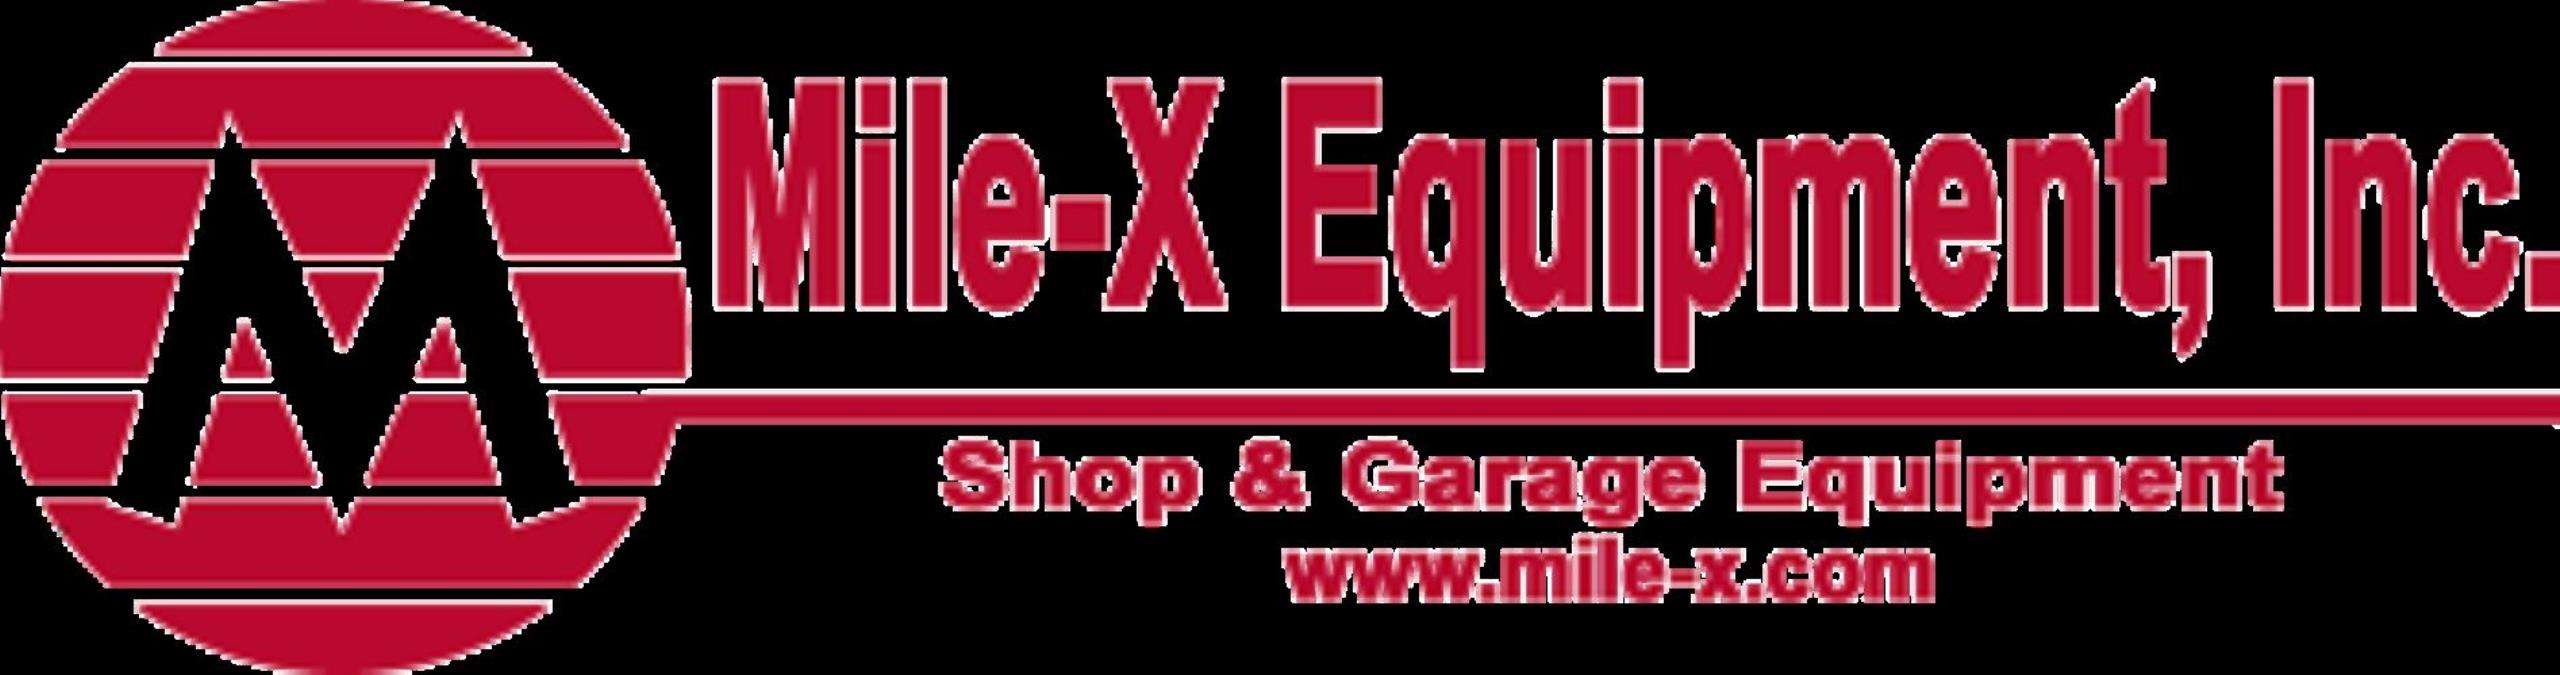 Mile-X Equipment Inc. Logo